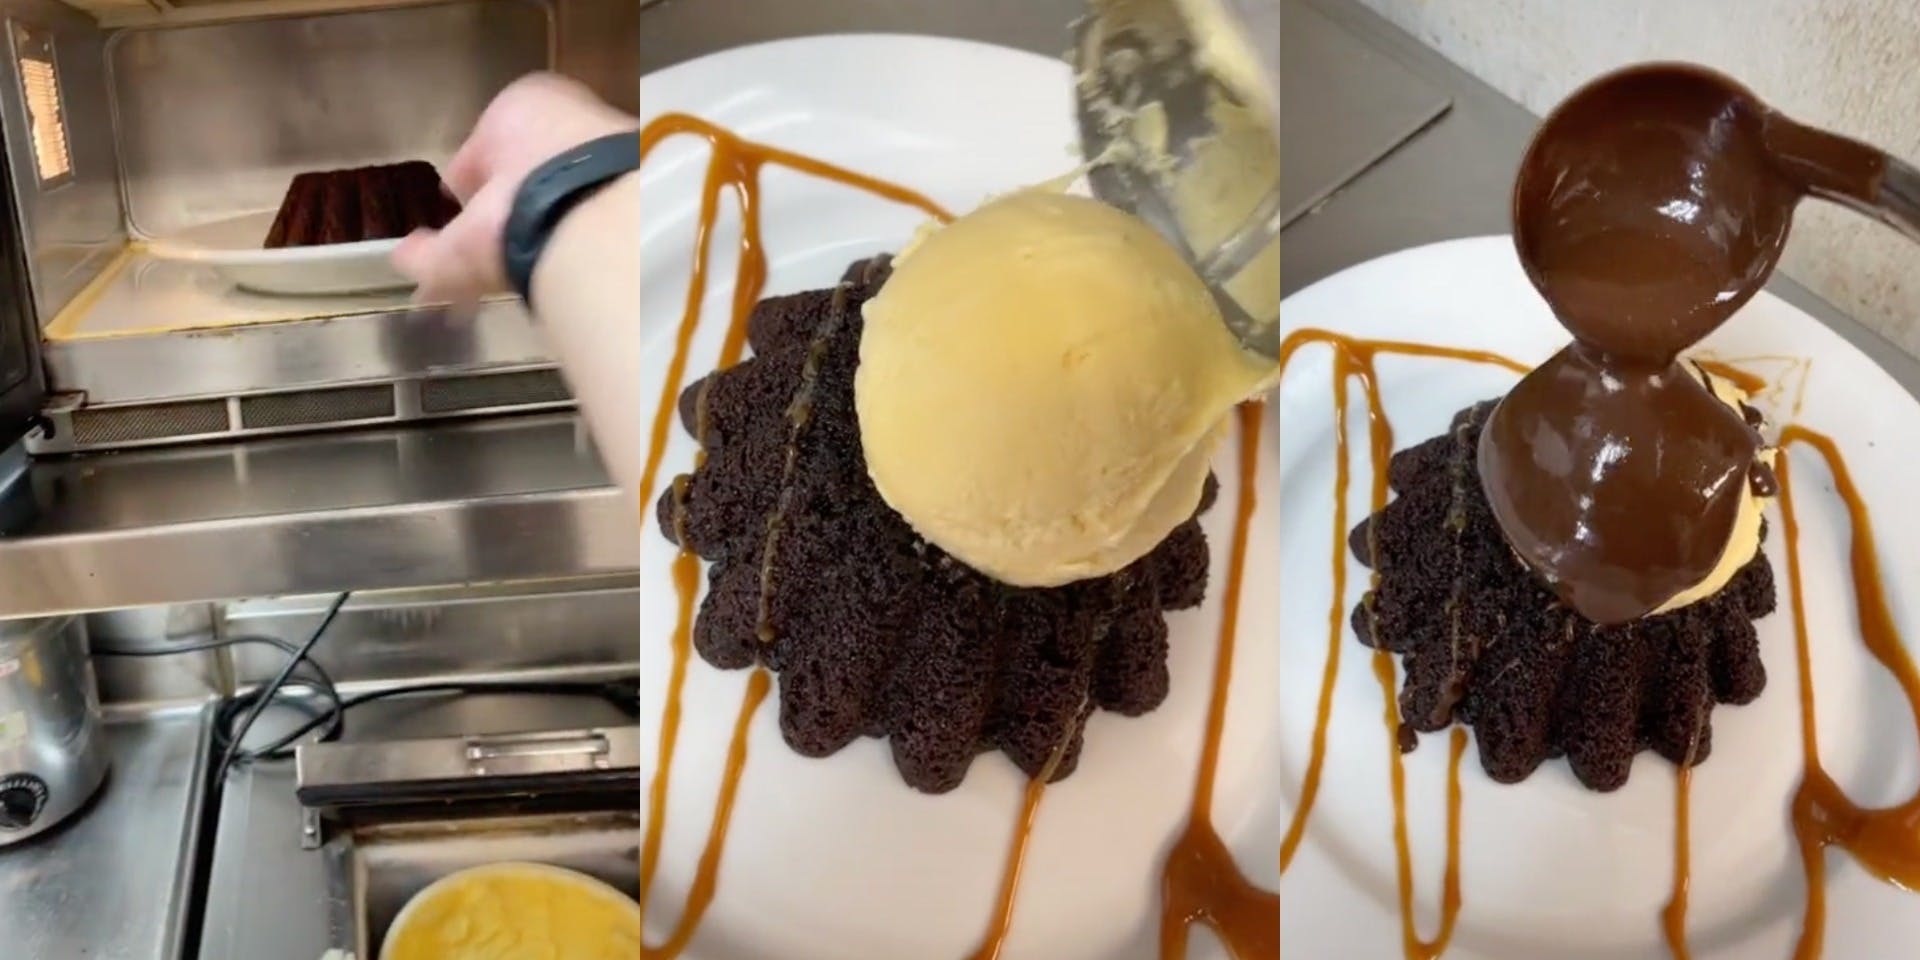 Chili S Employee Exposes How To Make Molten Chocolate Cake On Tiktok